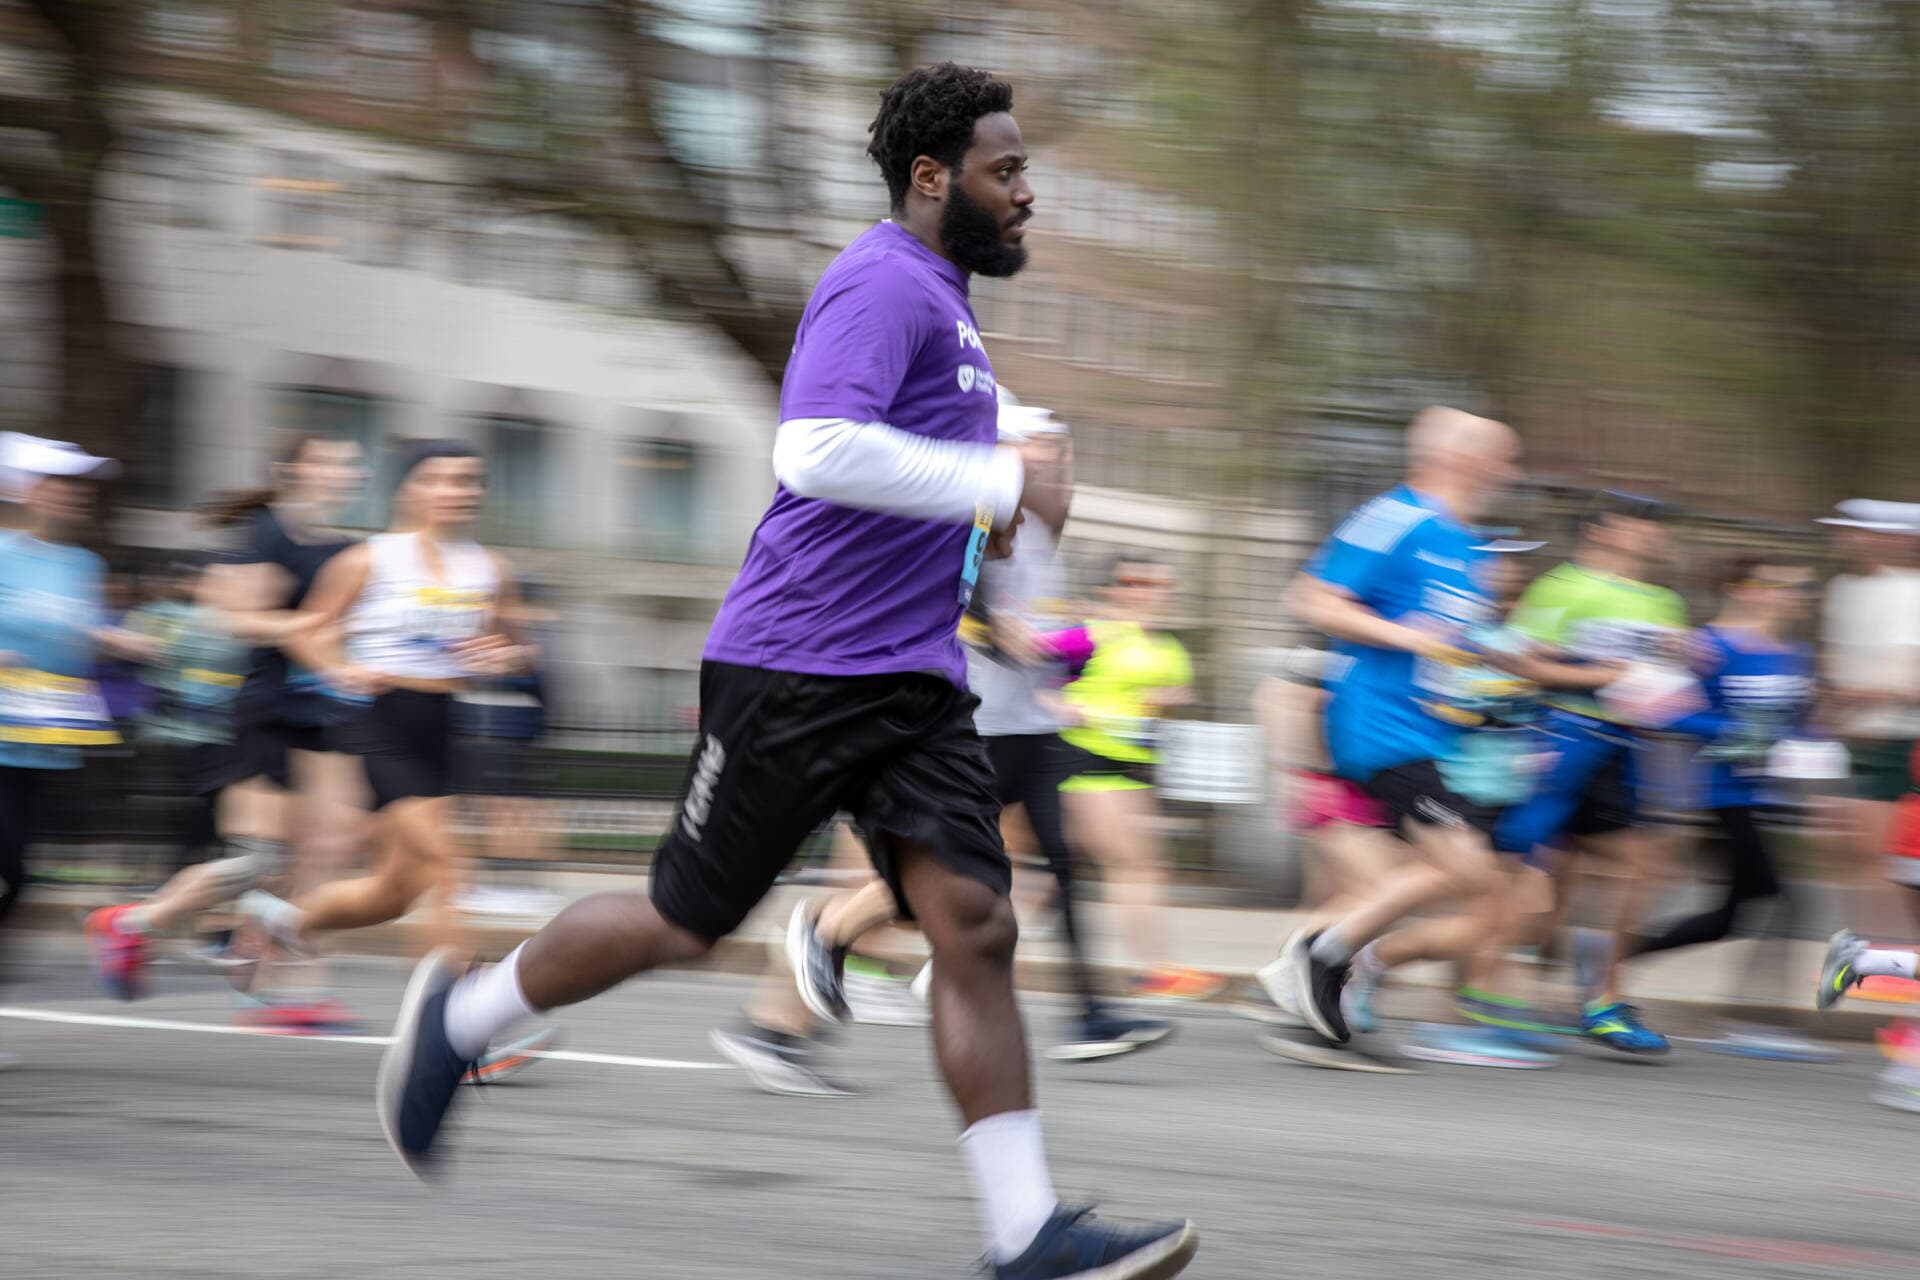 Competitors in the pre-marathon 5K race in Boston dash along Arlington Street. (Robin Lubbock/WBUR)